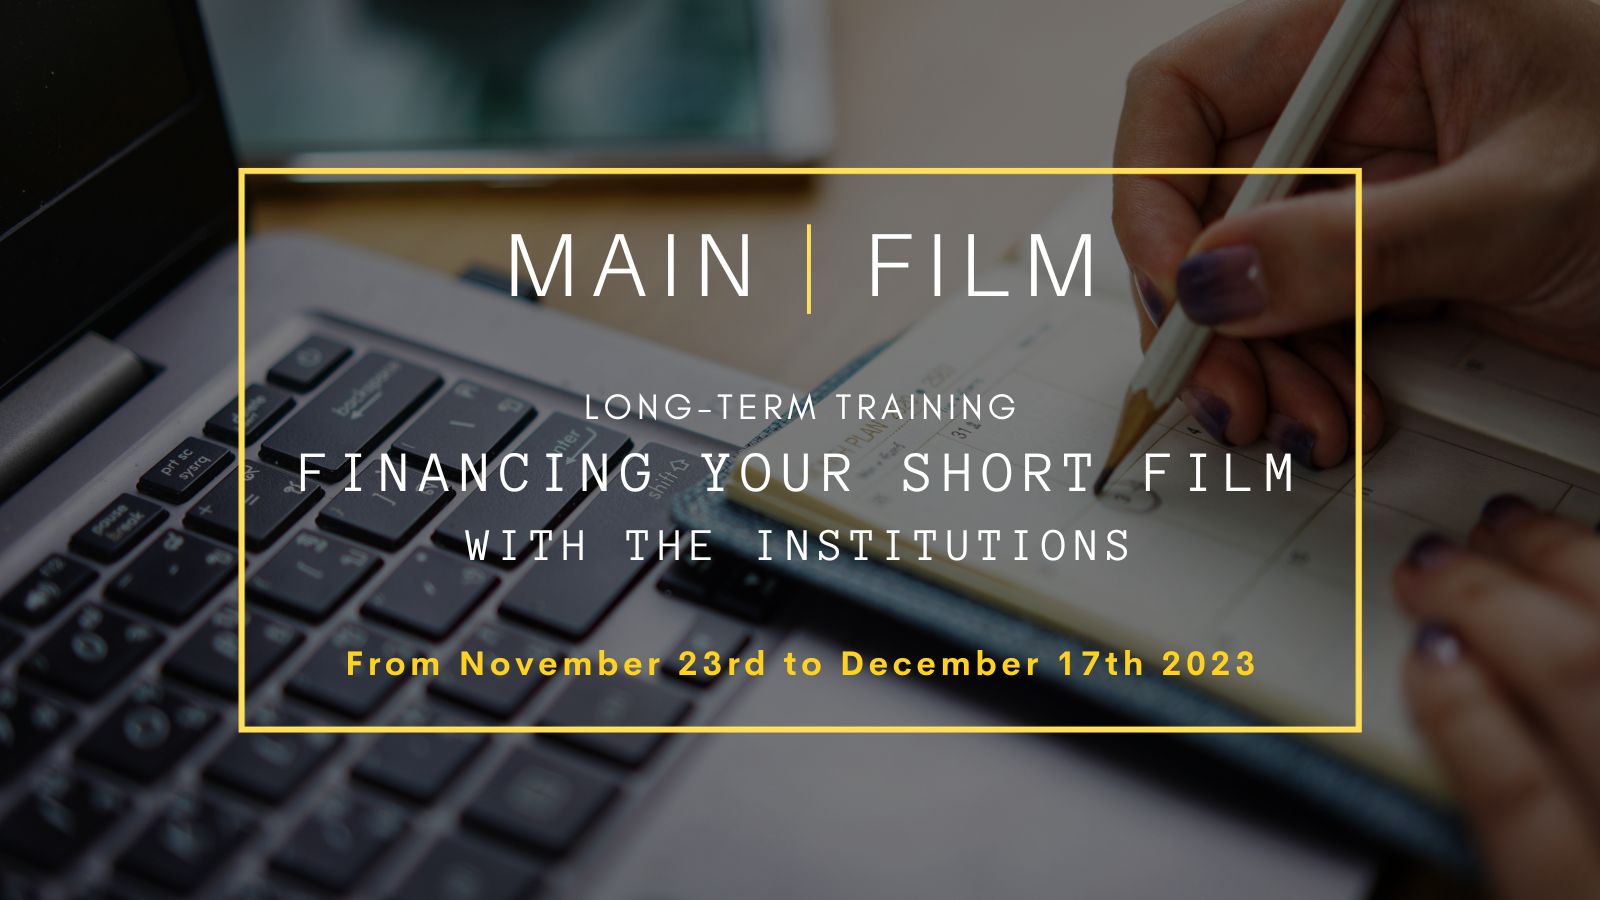 Financing your short film